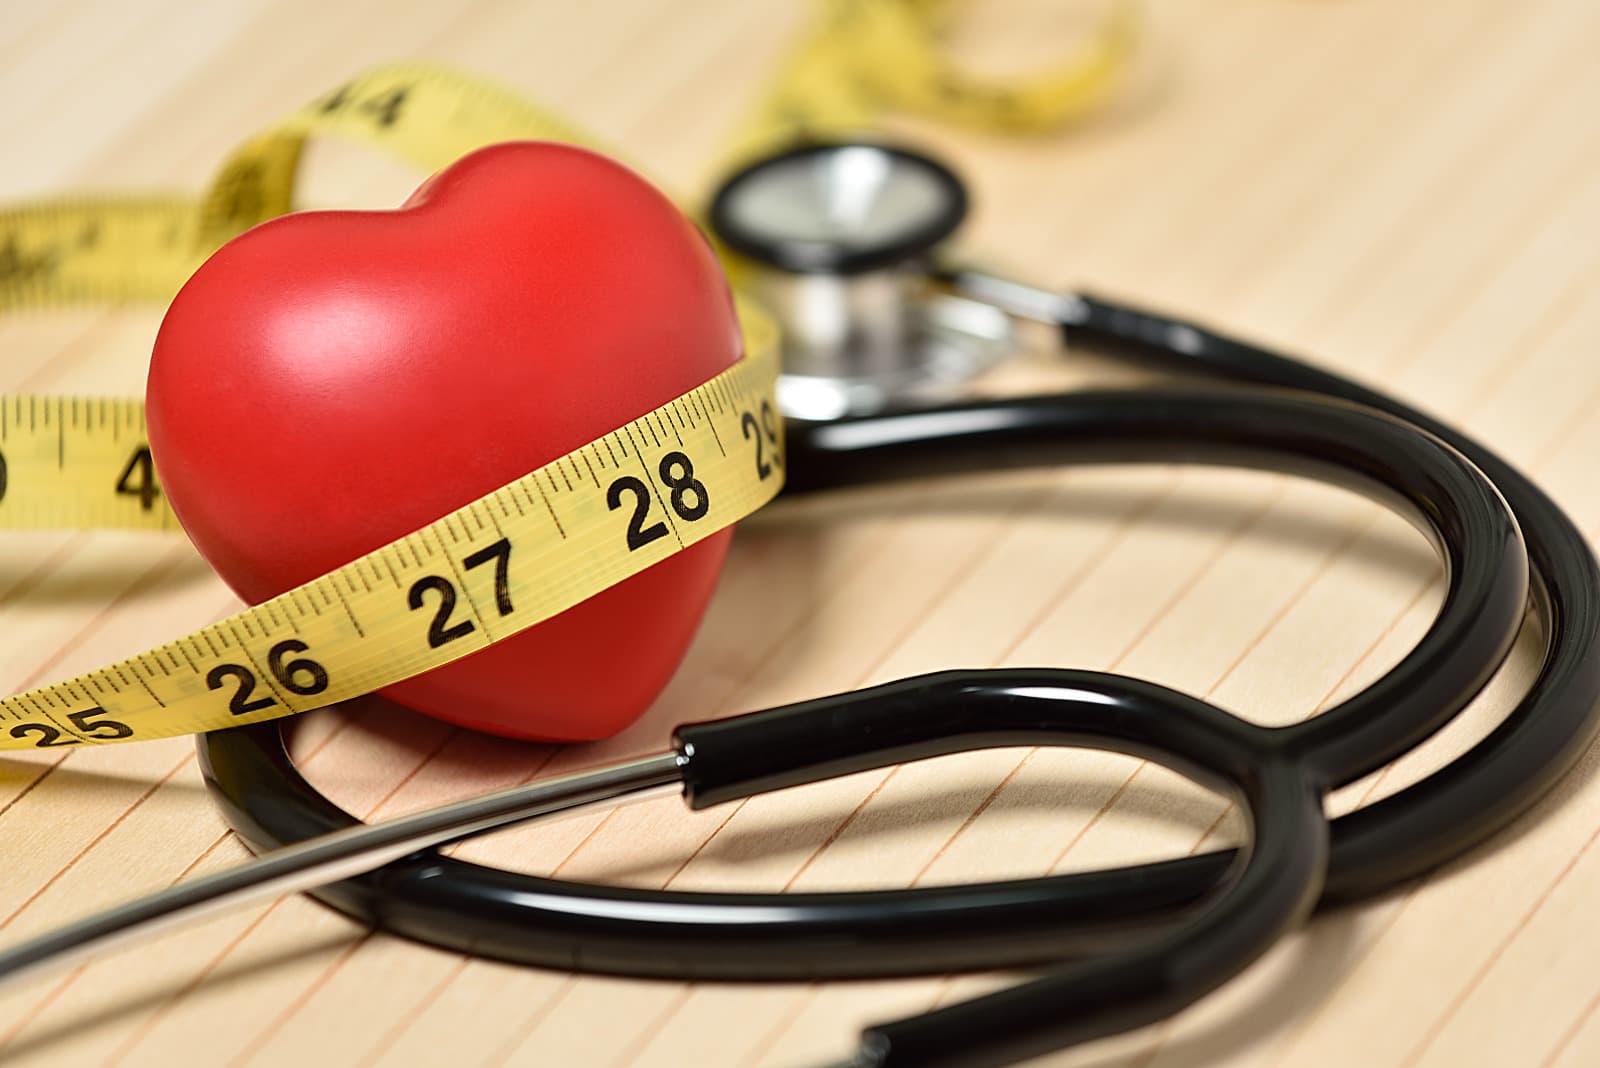 Mounjaro as a tool for reducing cardiovascular risk factors